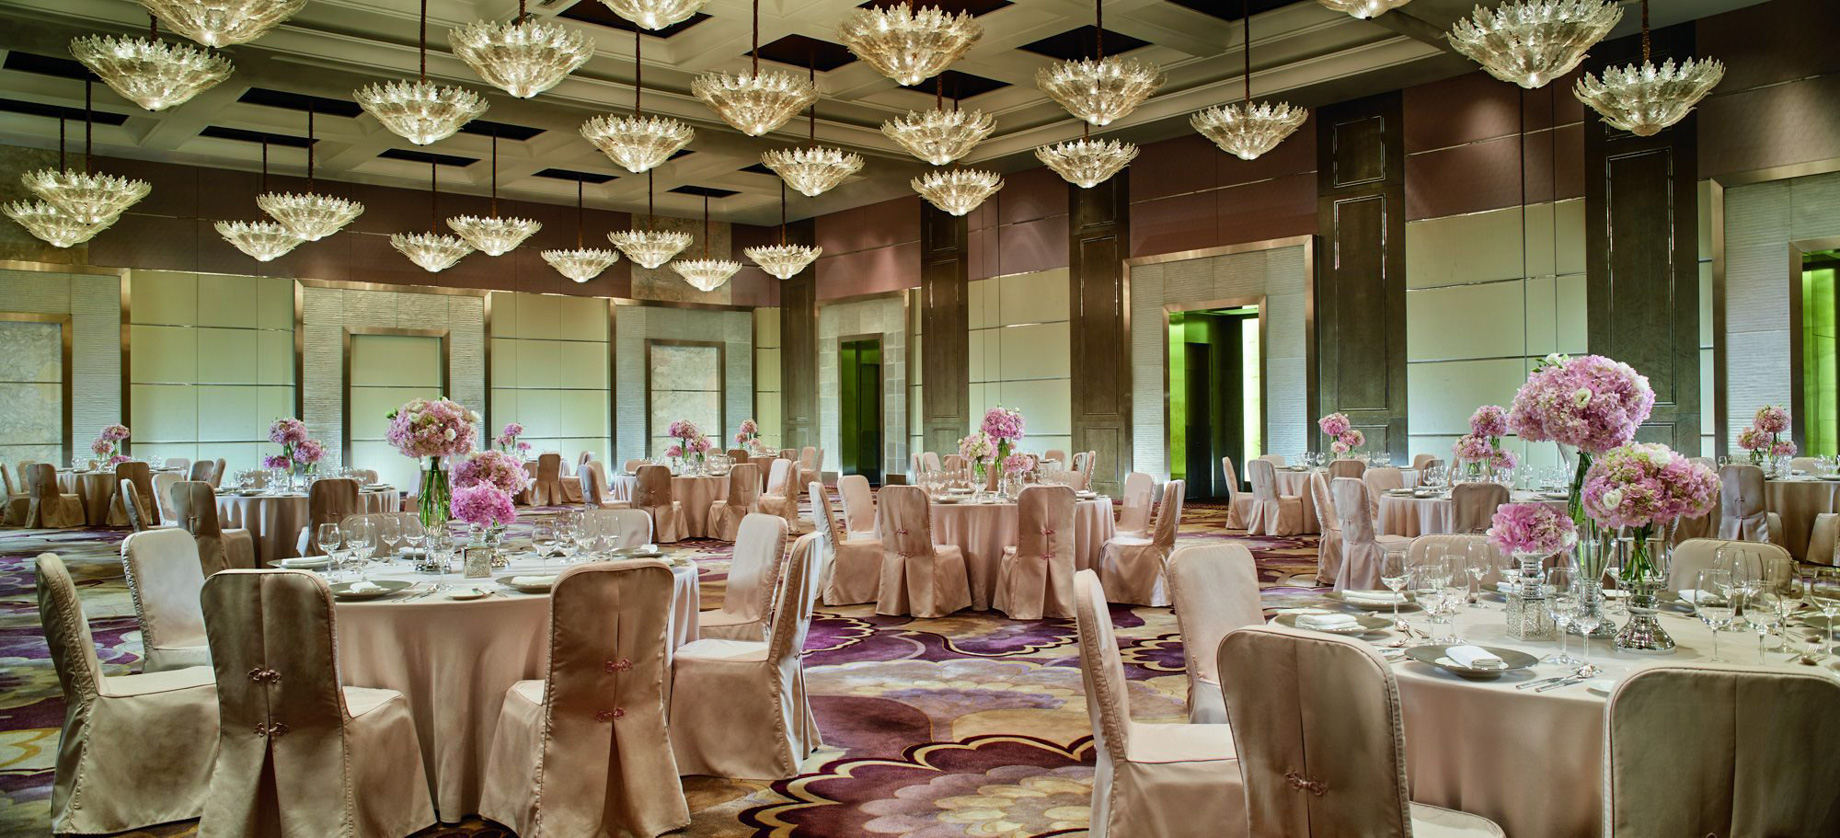 The Ritz-Carlton Beijing, Financial Street Hotel – Beijing, China – Ballroom